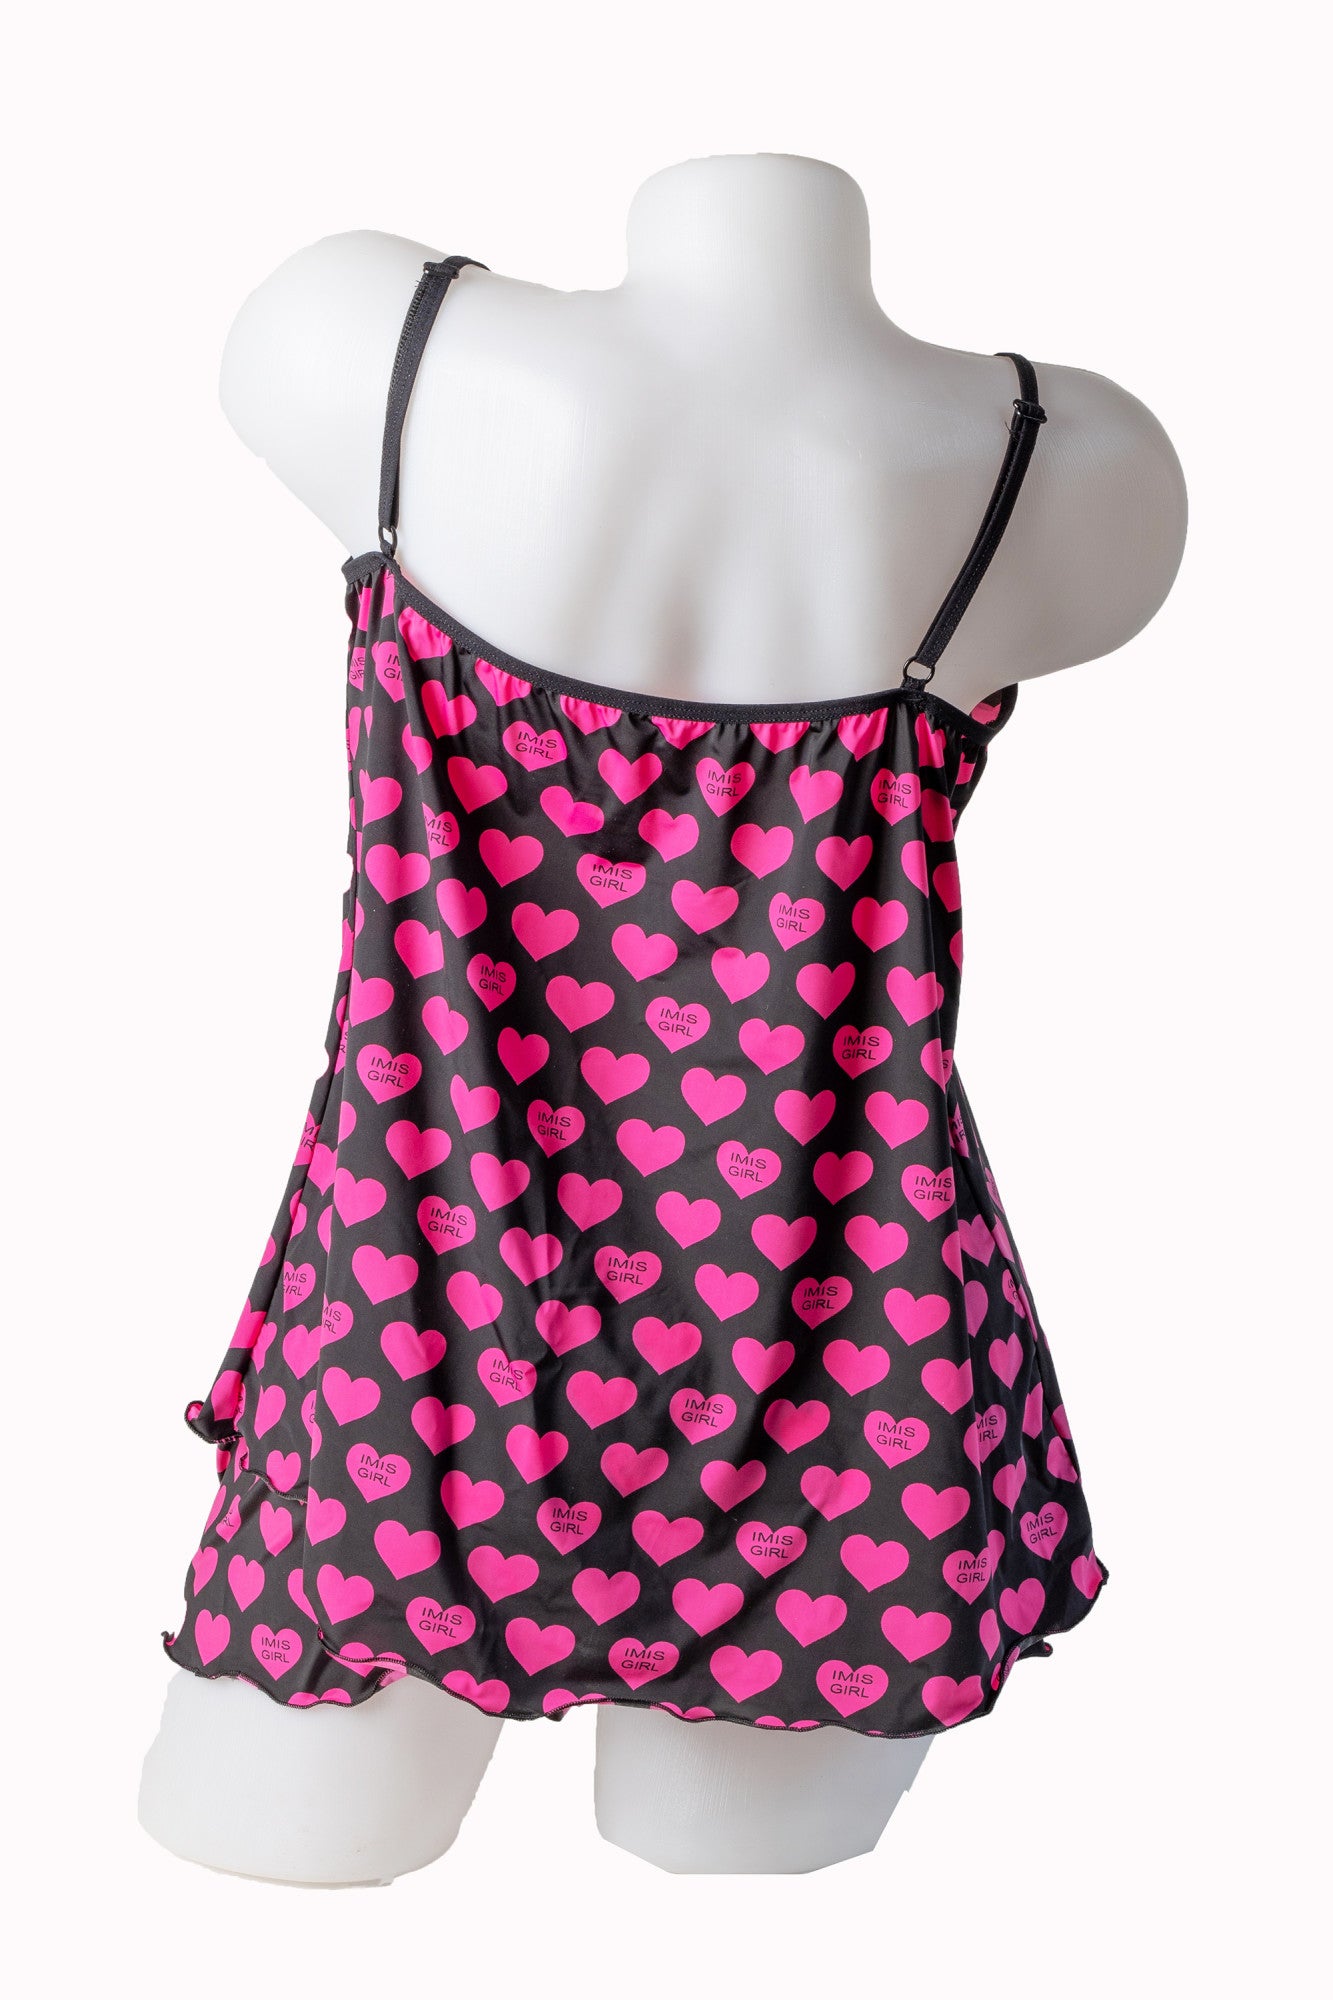 Pijama dama, microfibra imprimata, elastica, negru cu inimioare, Pinky Heart, BLD by Exclusive